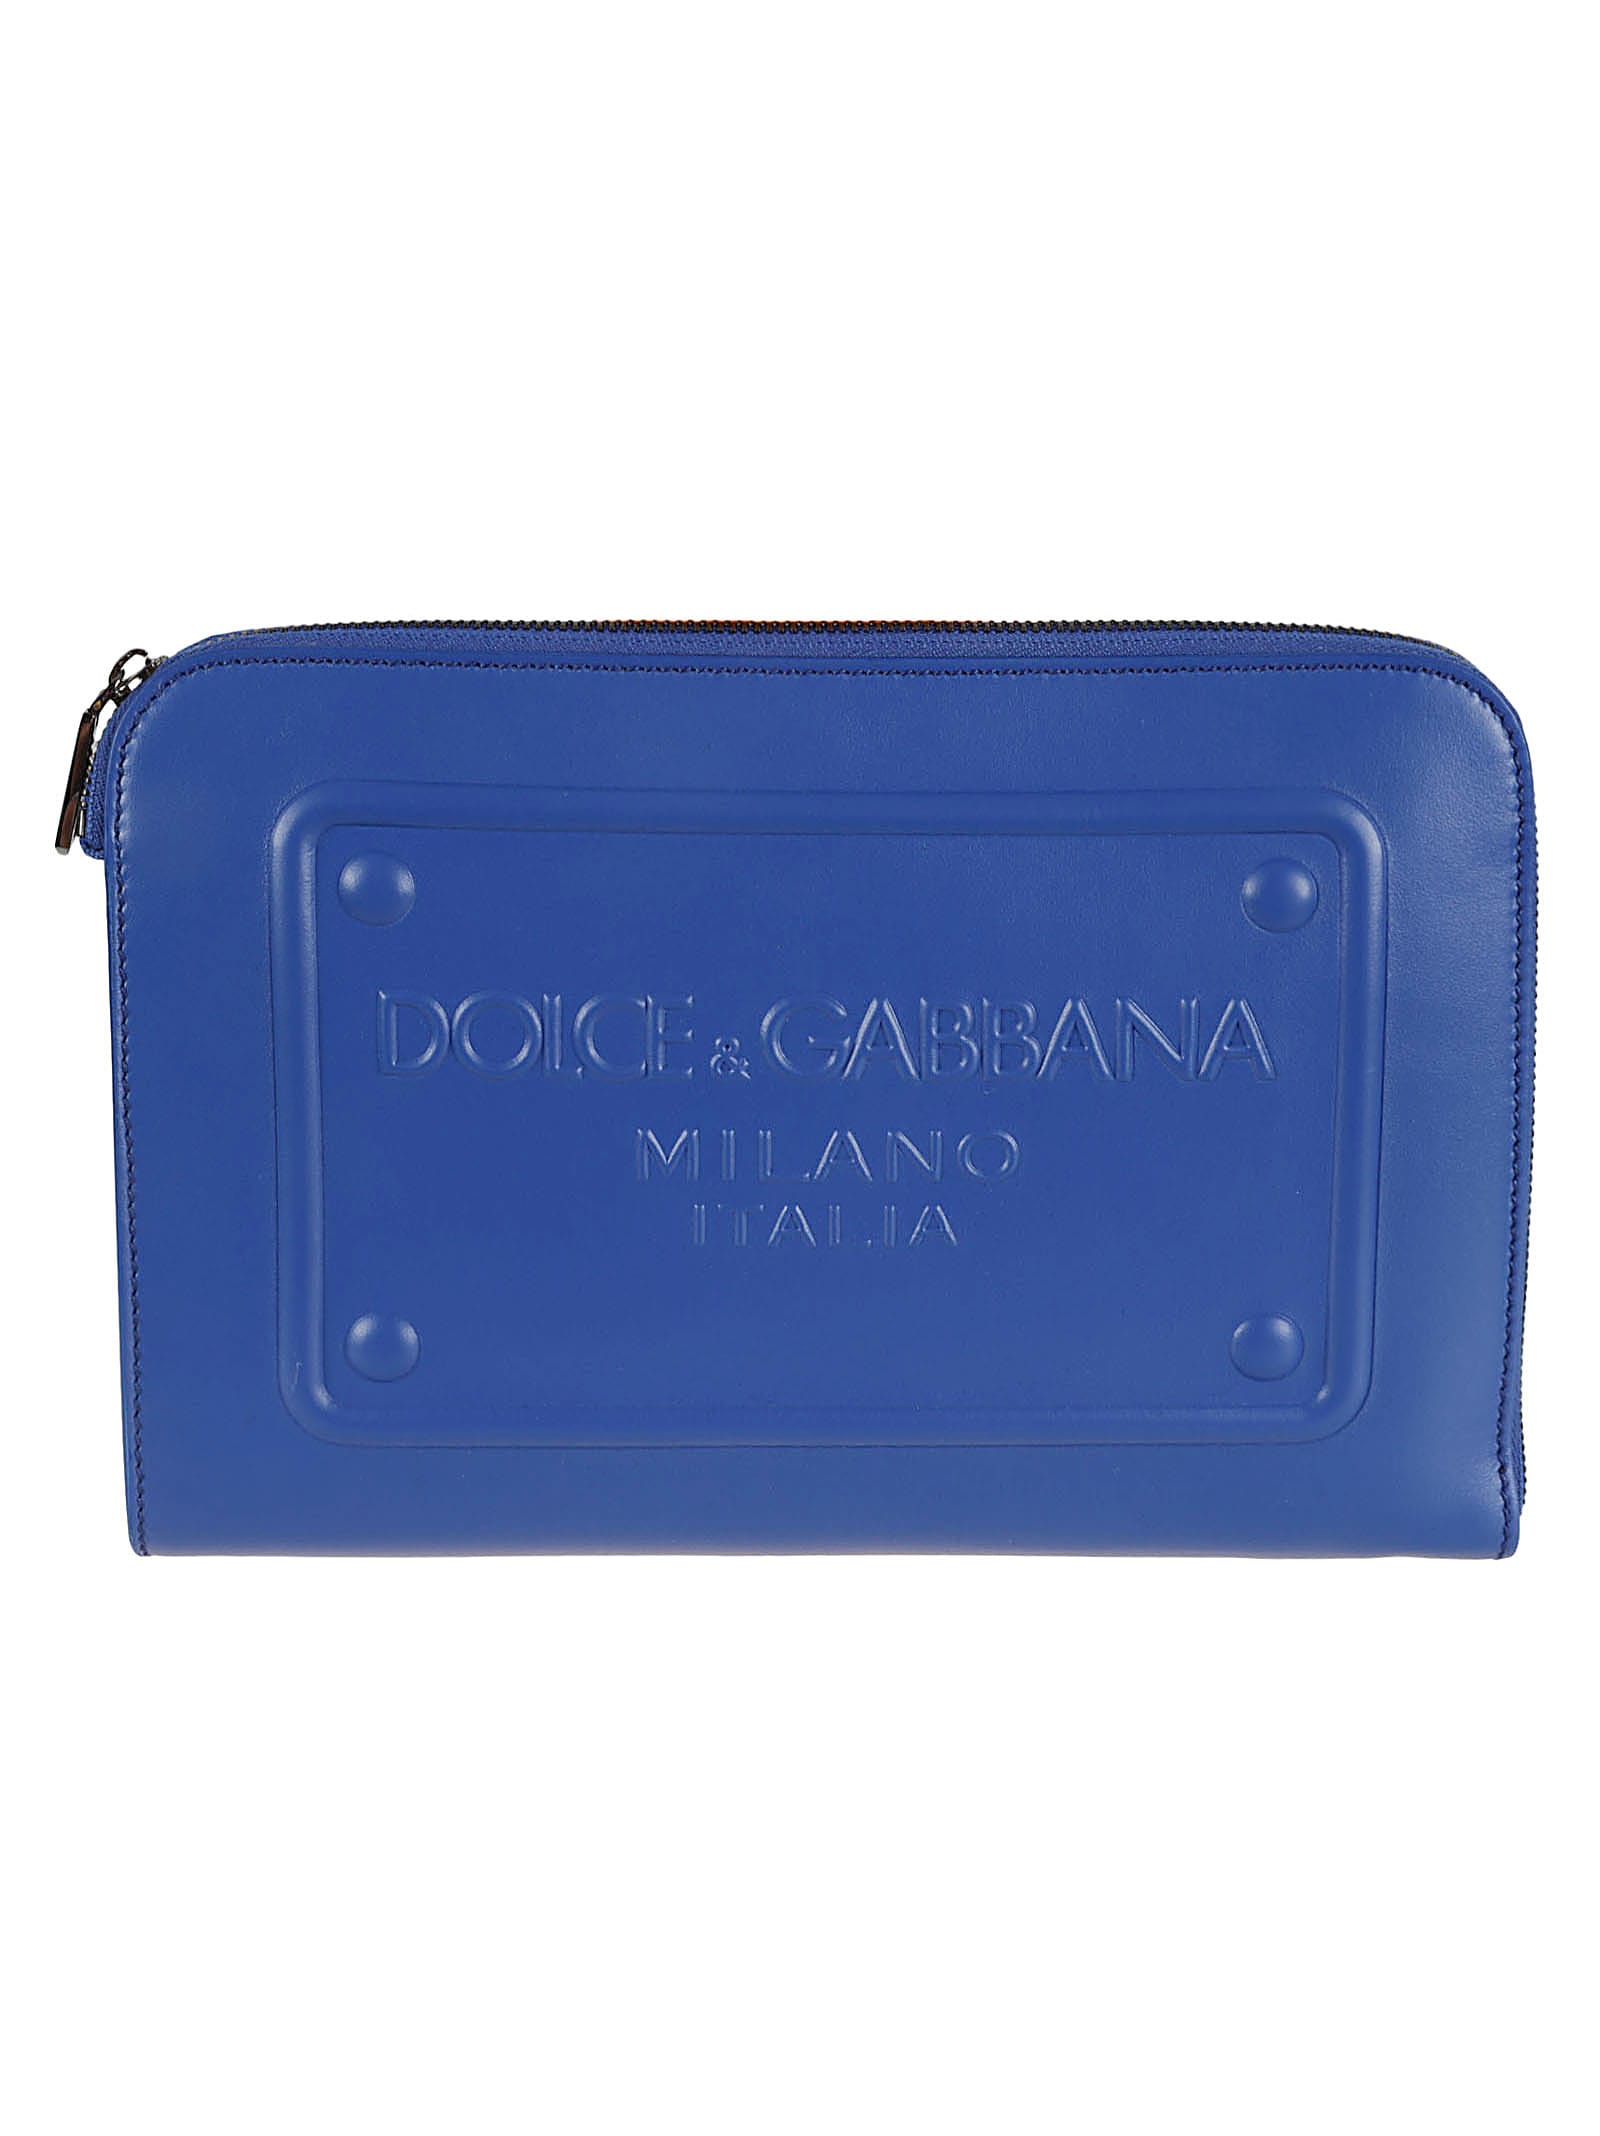 Dolce & Gabbana Logo Embossed Clutch